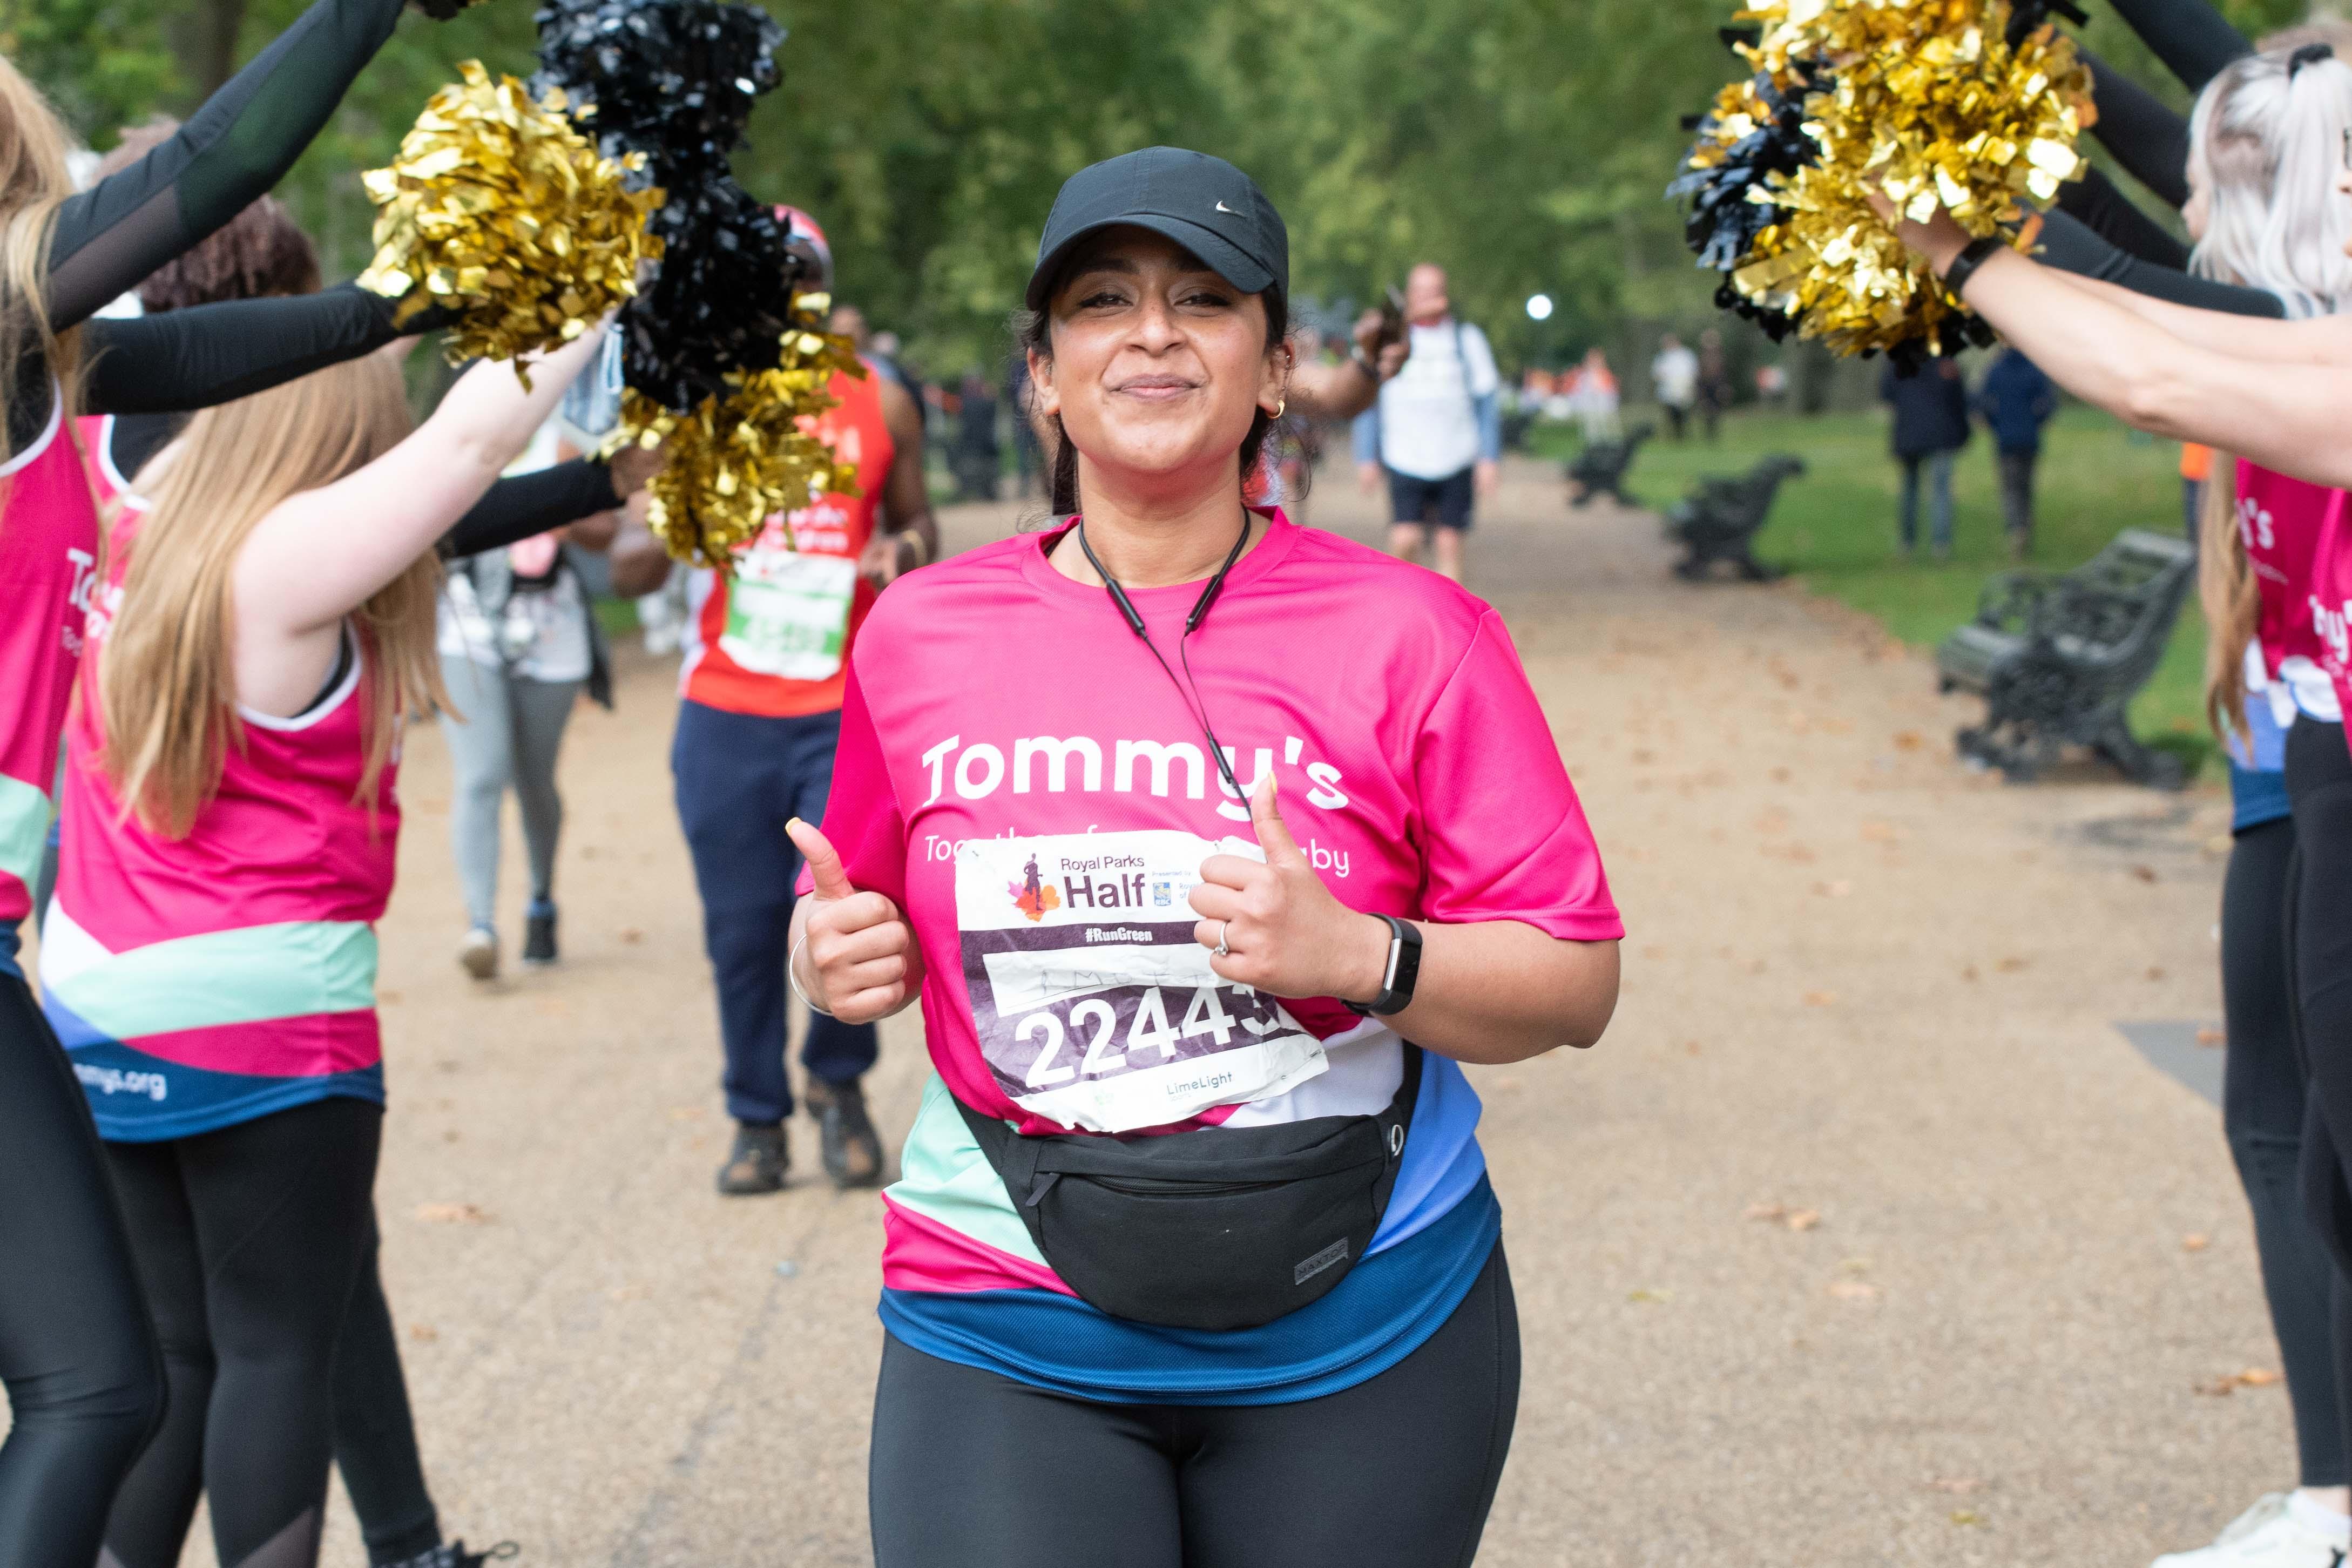 Sweaty Betty partners with the Royal Parks Half Marathon as